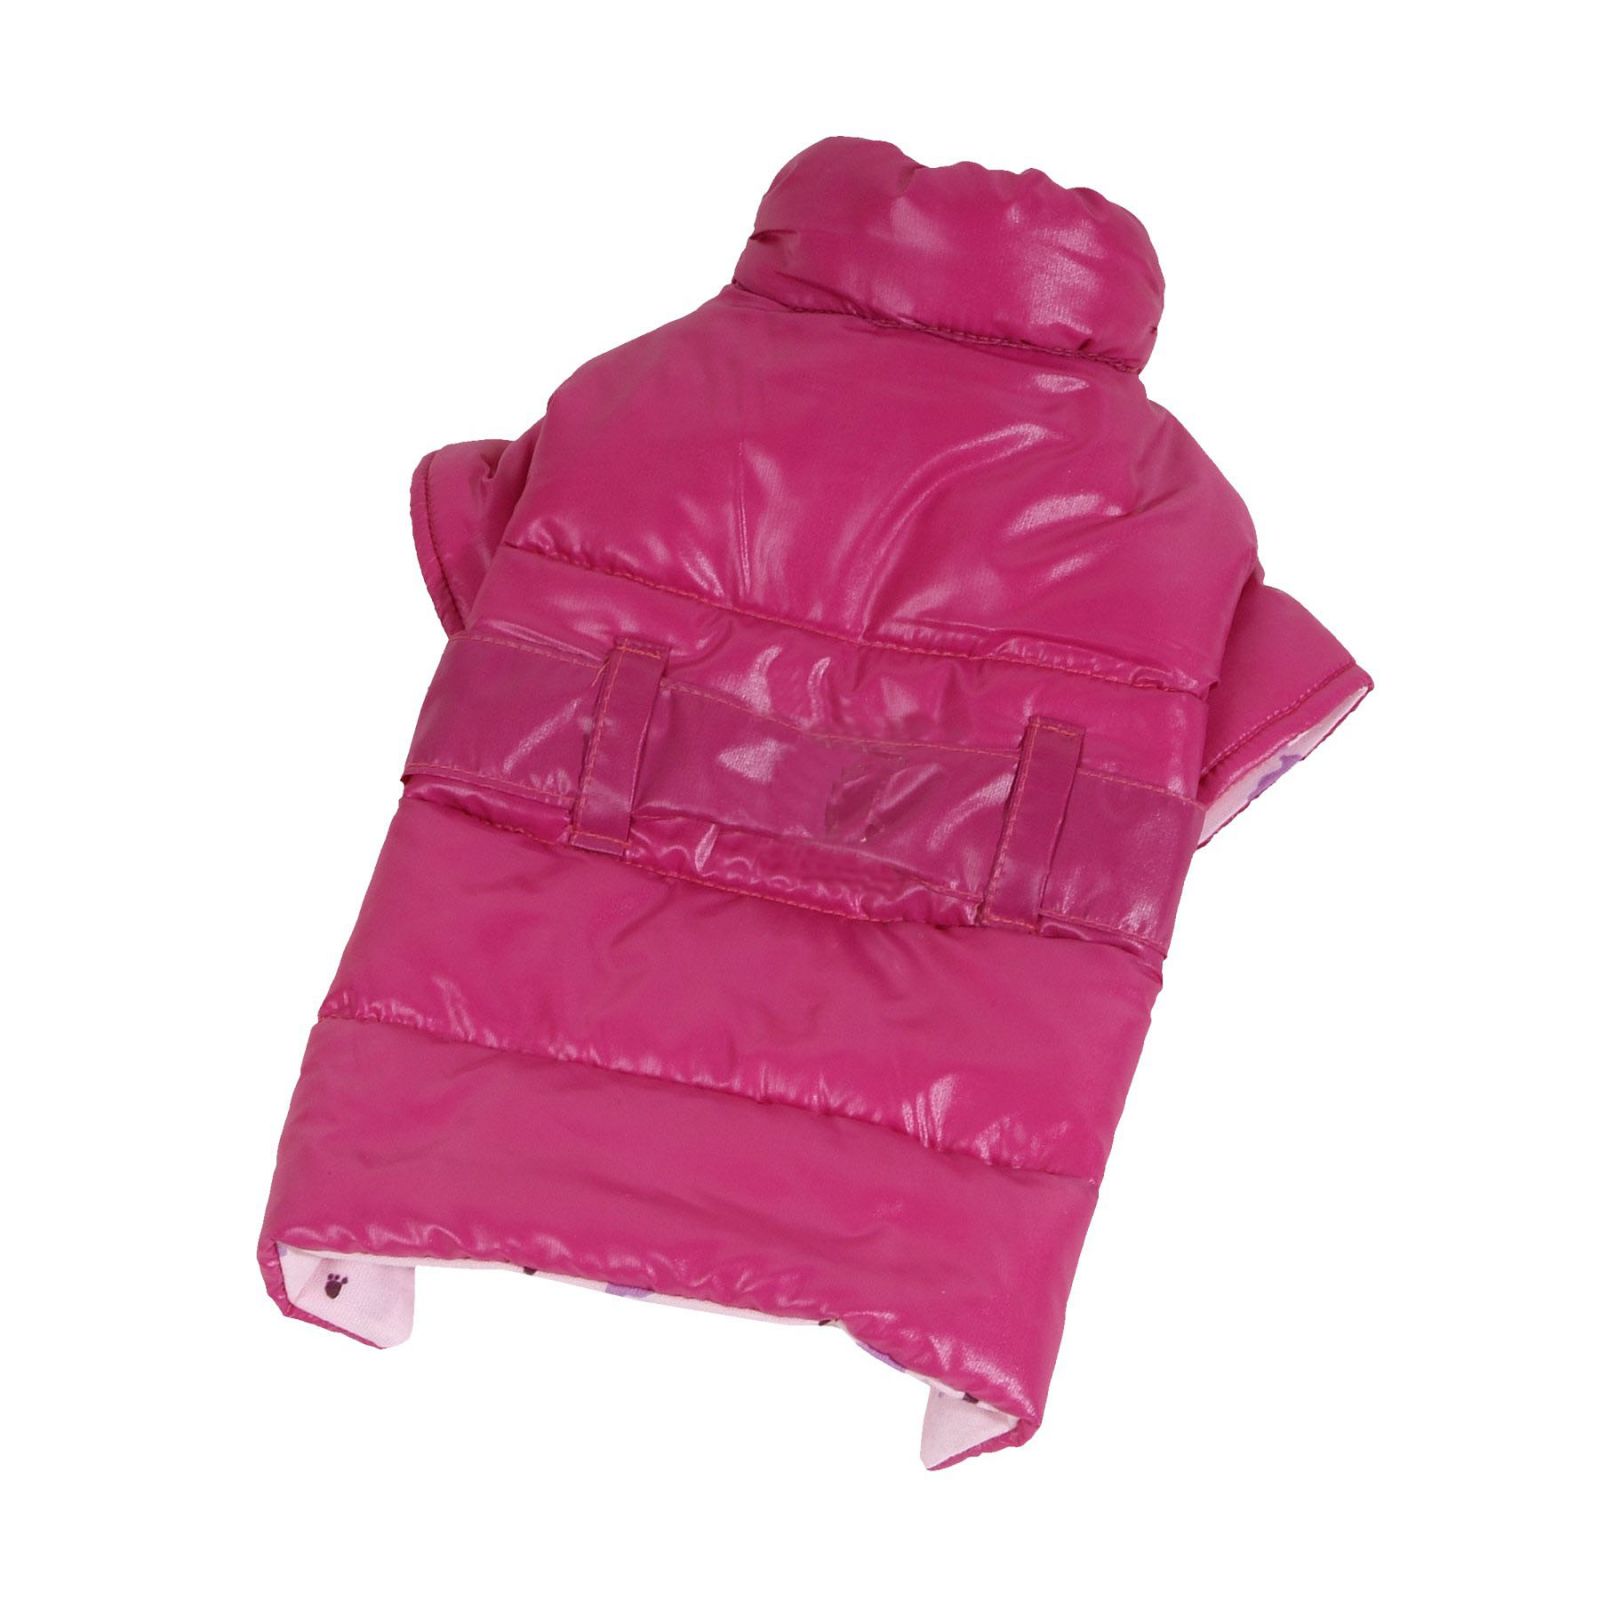 Kabátek De Luxe - růžová (doprodej skladových zásob) L I love pets